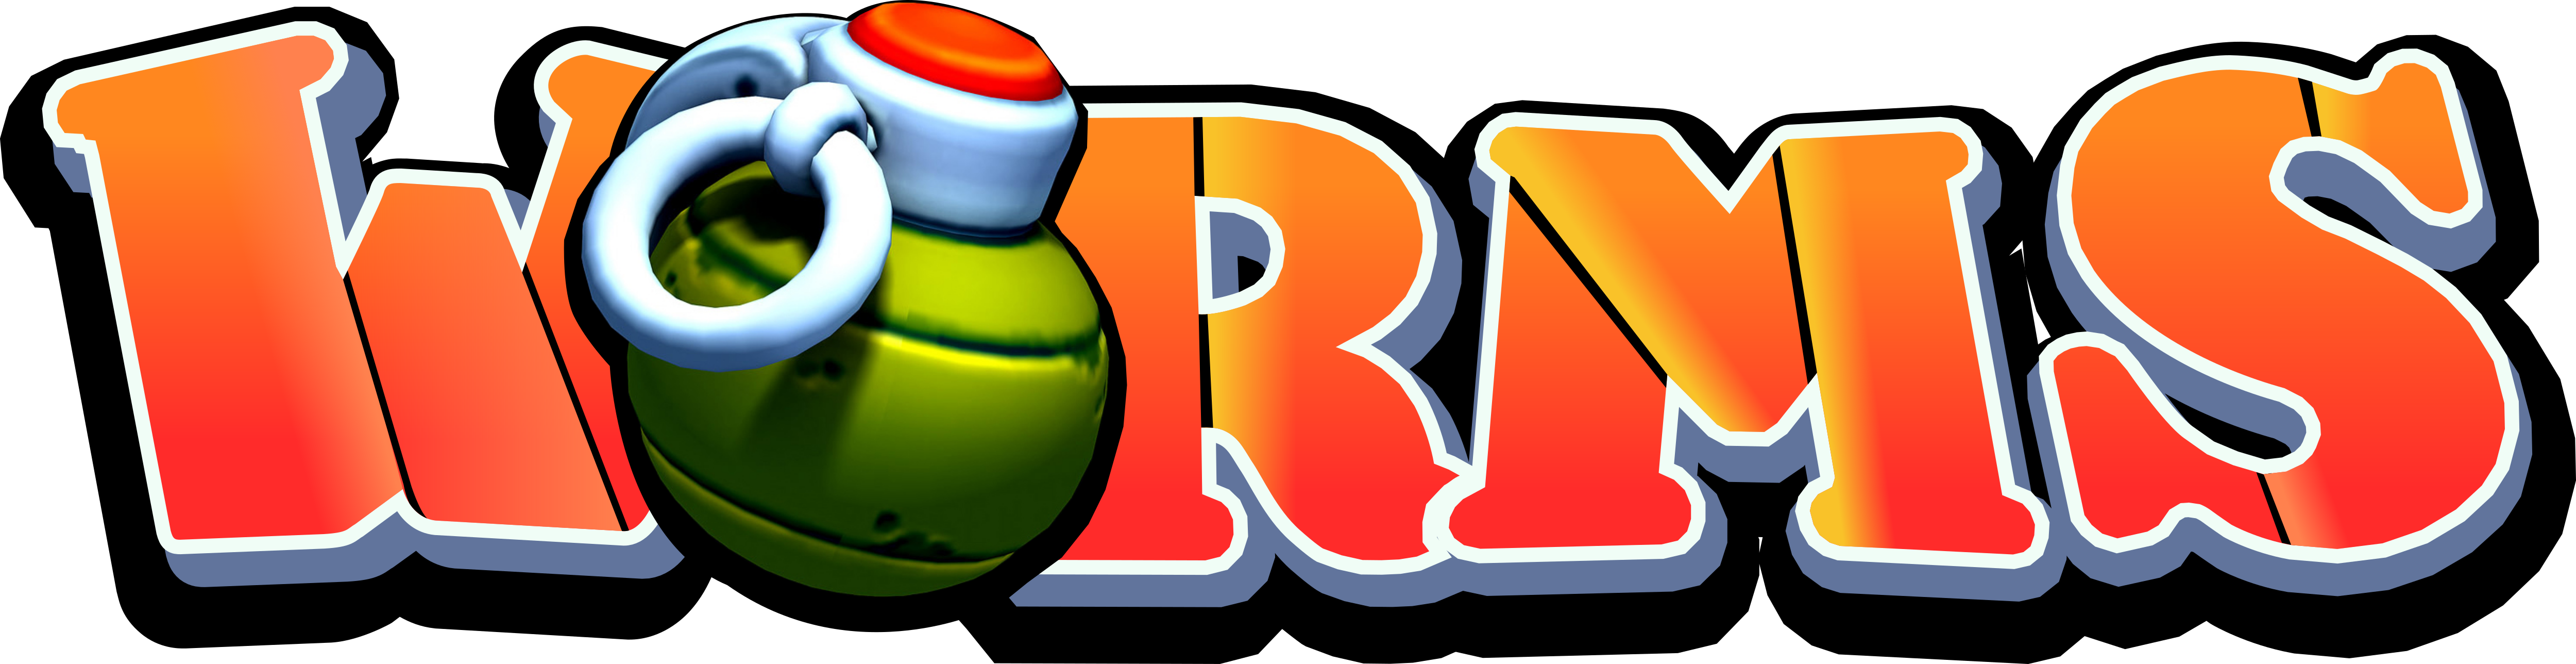 worms game logo